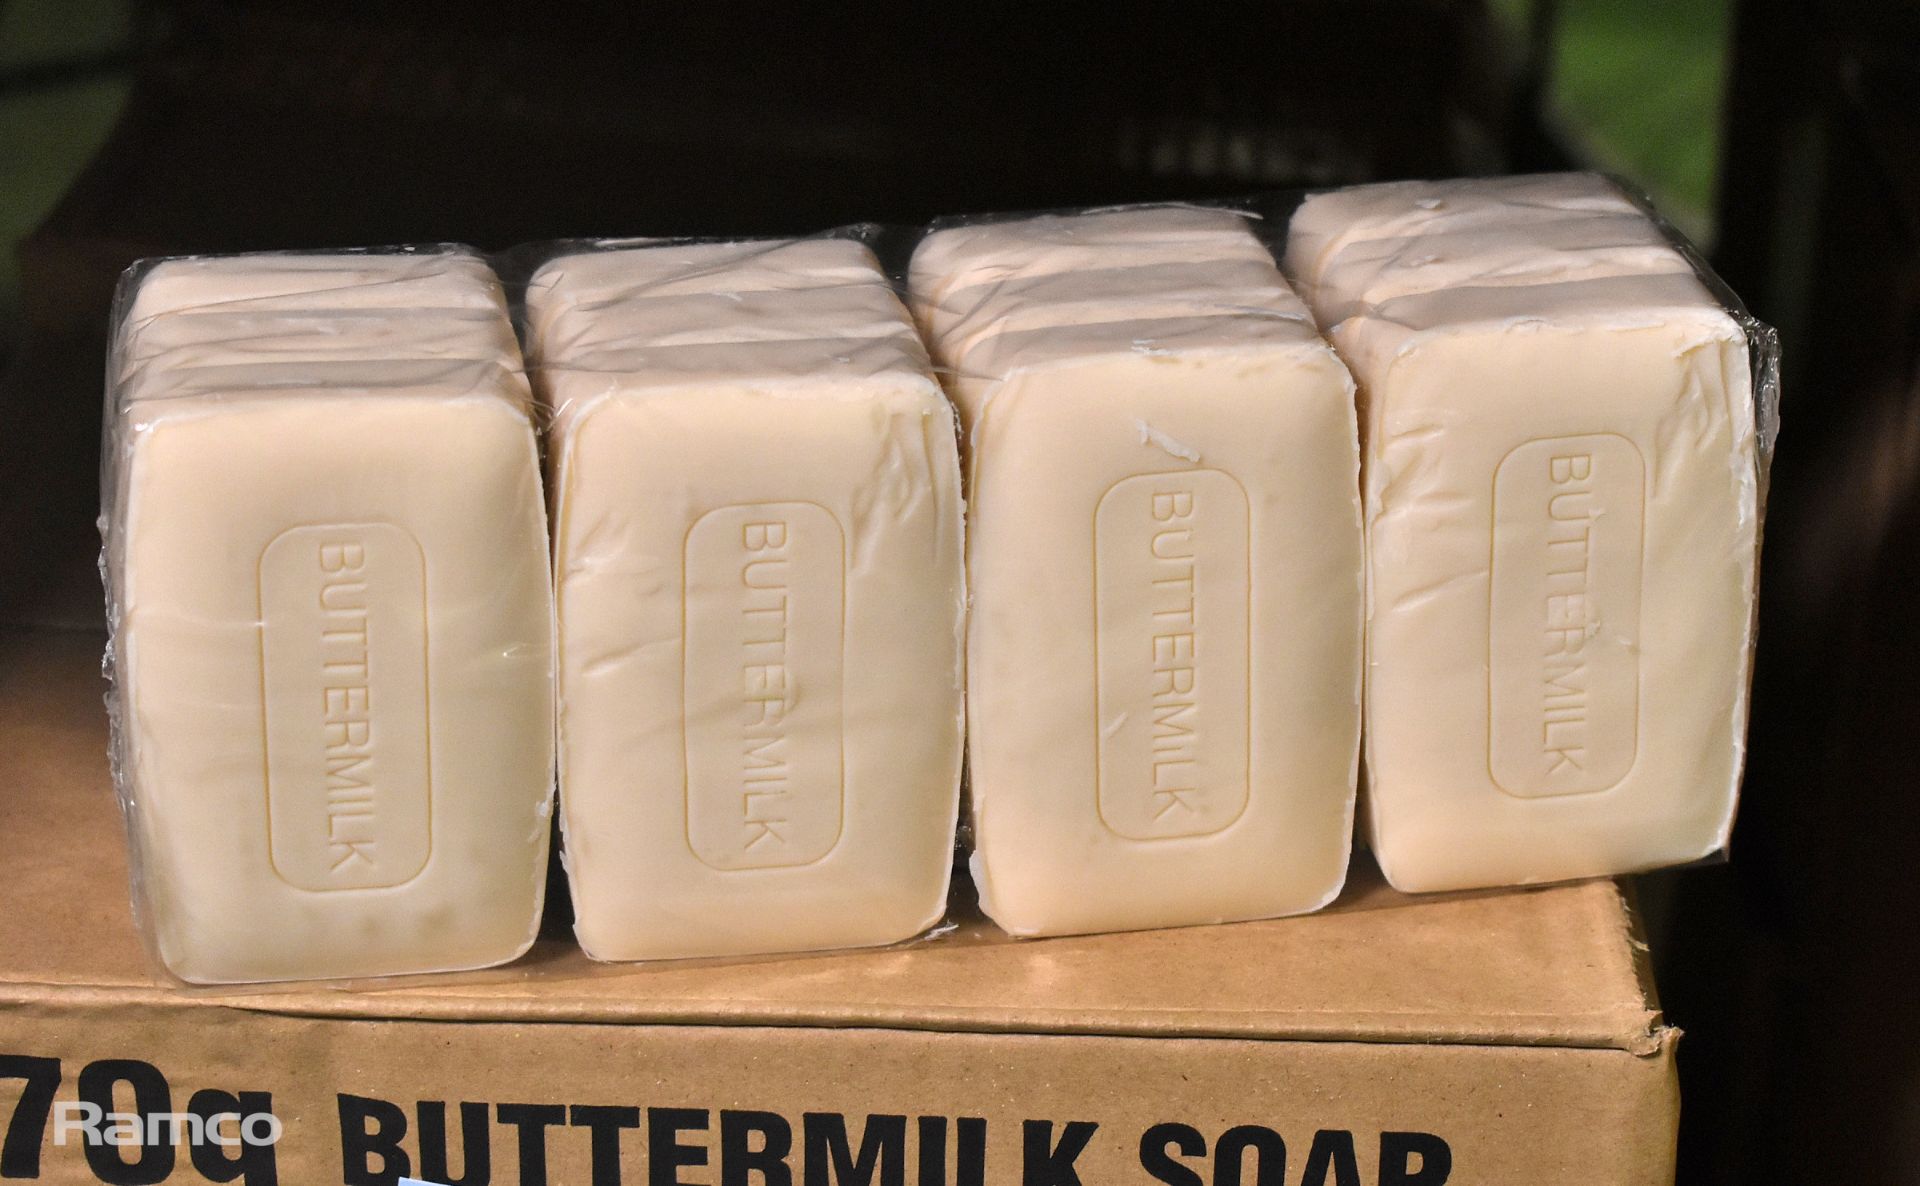 16x boxes of Buttermilk soap bar 70g - 72 units per box - Image 2 of 2